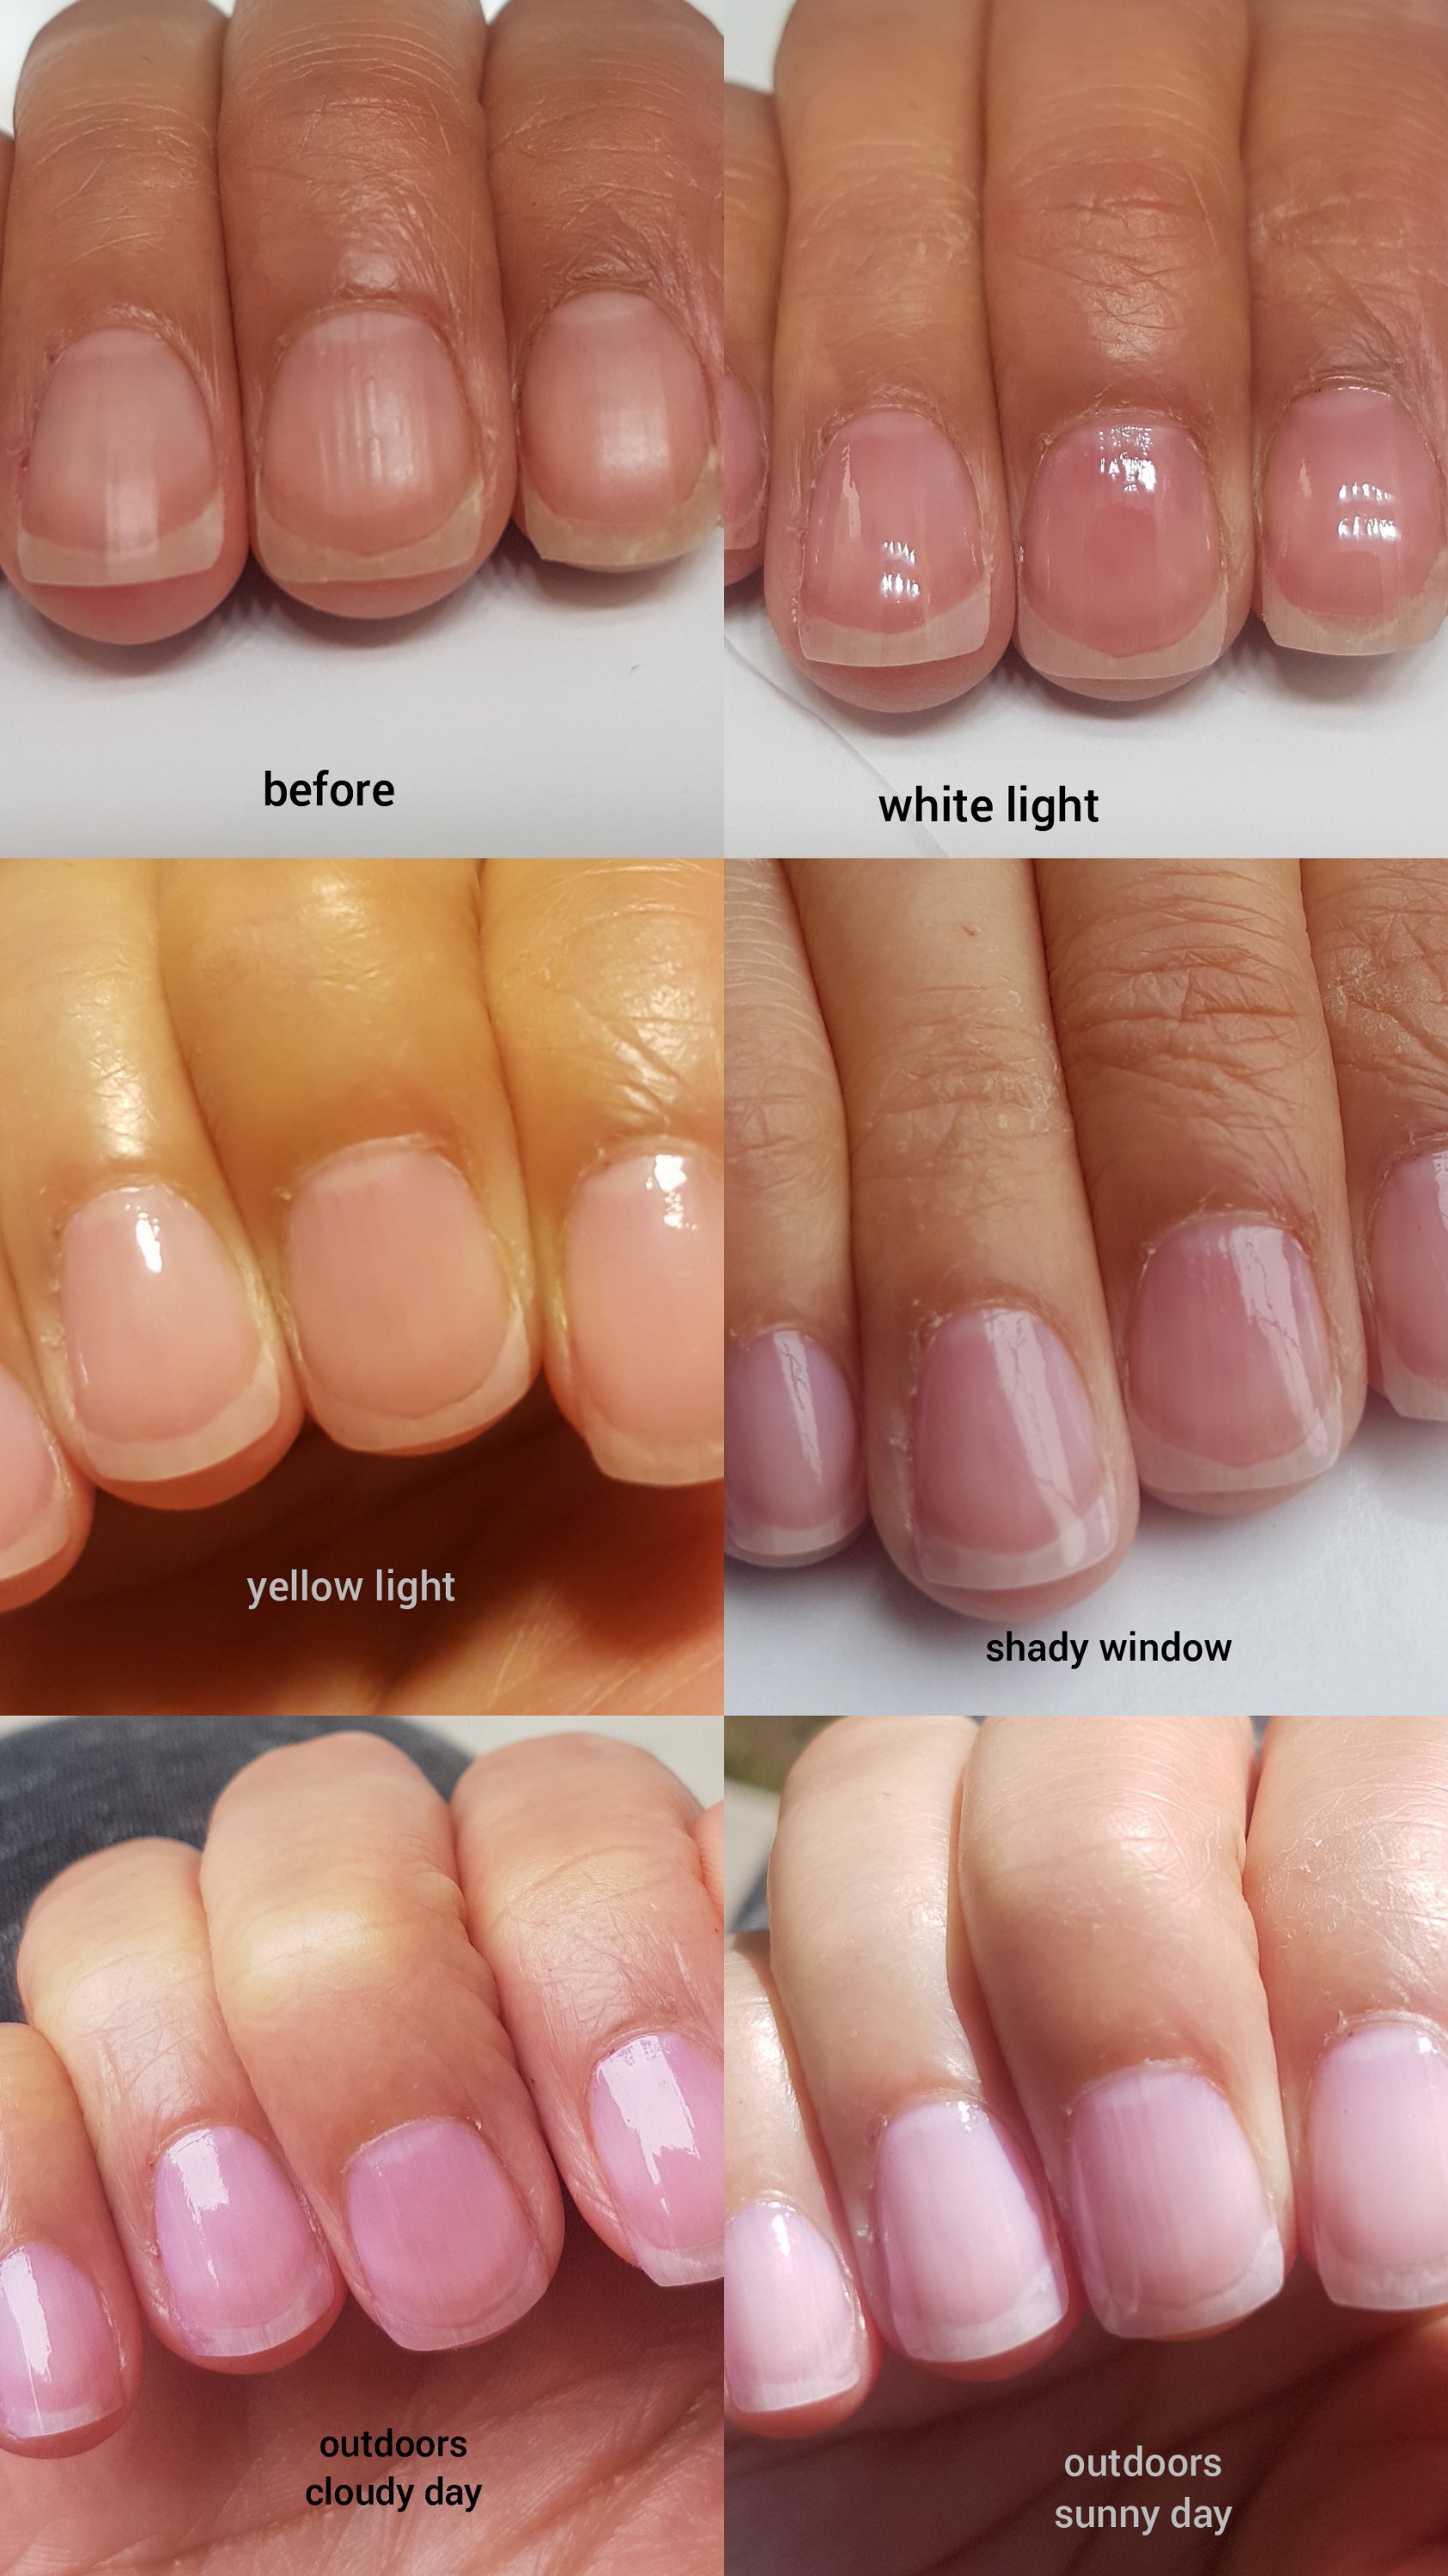 dior clear nail polish